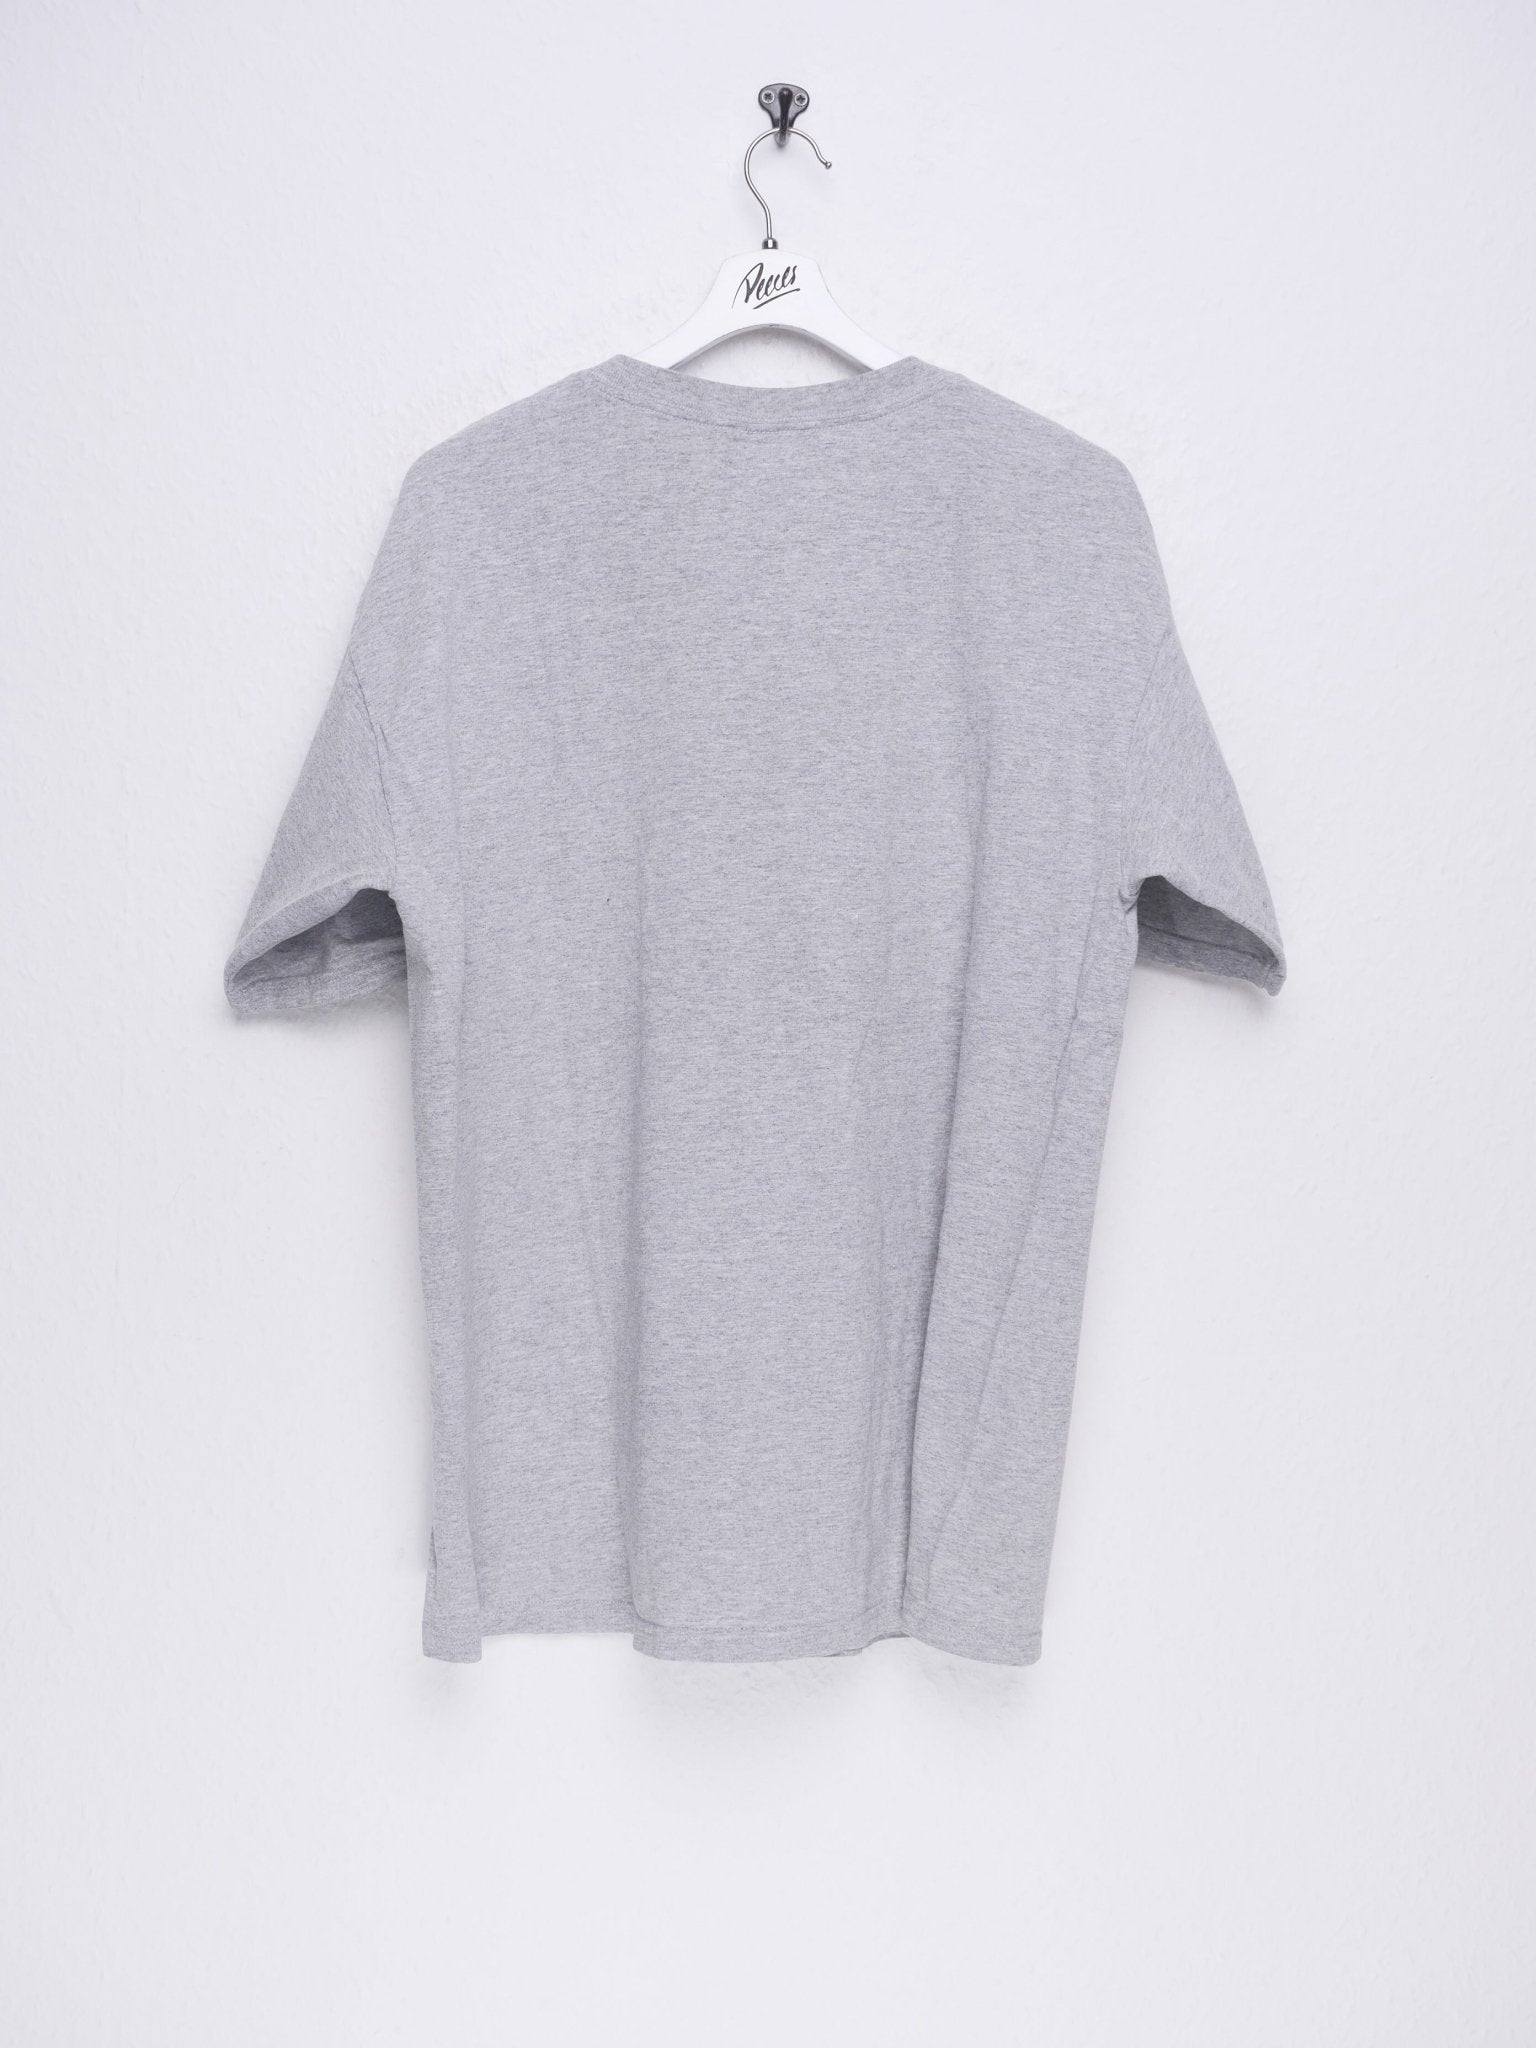 printed Centerville grey Shirt - Peeces